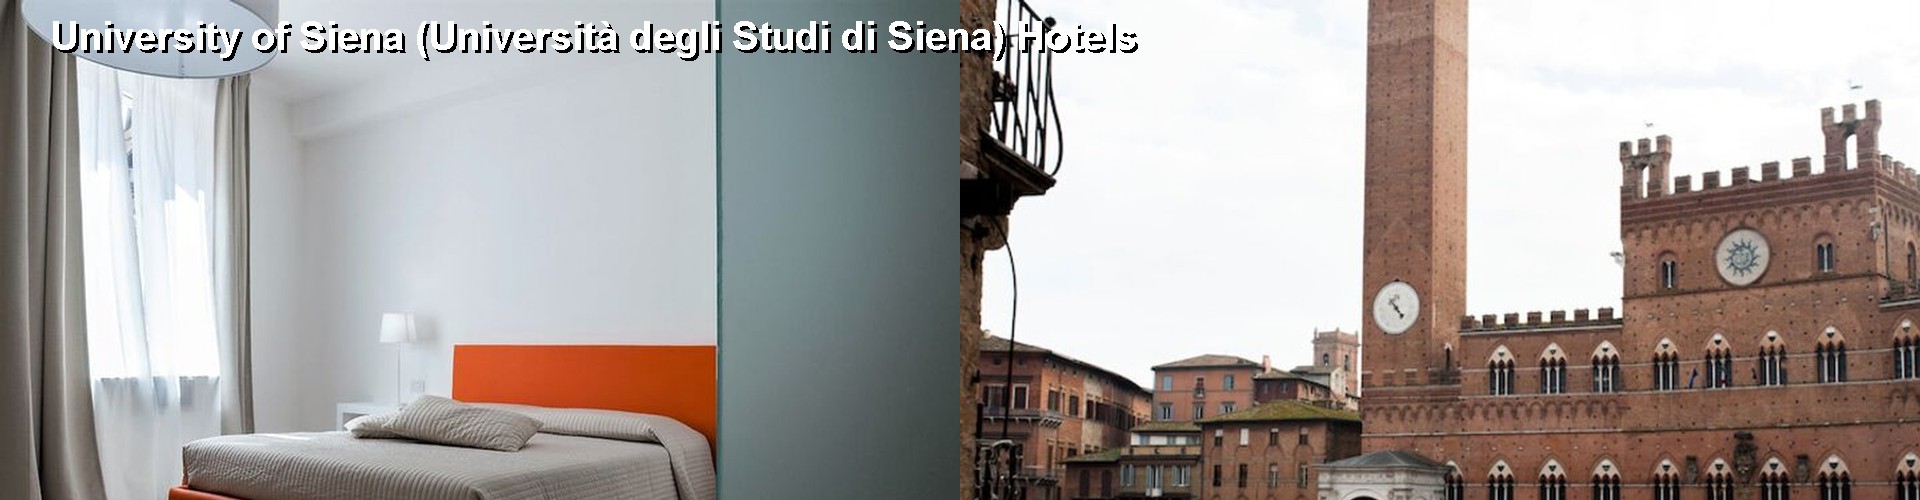 5 Best Hotels near University of Siena (Università degli Studi di Siena)